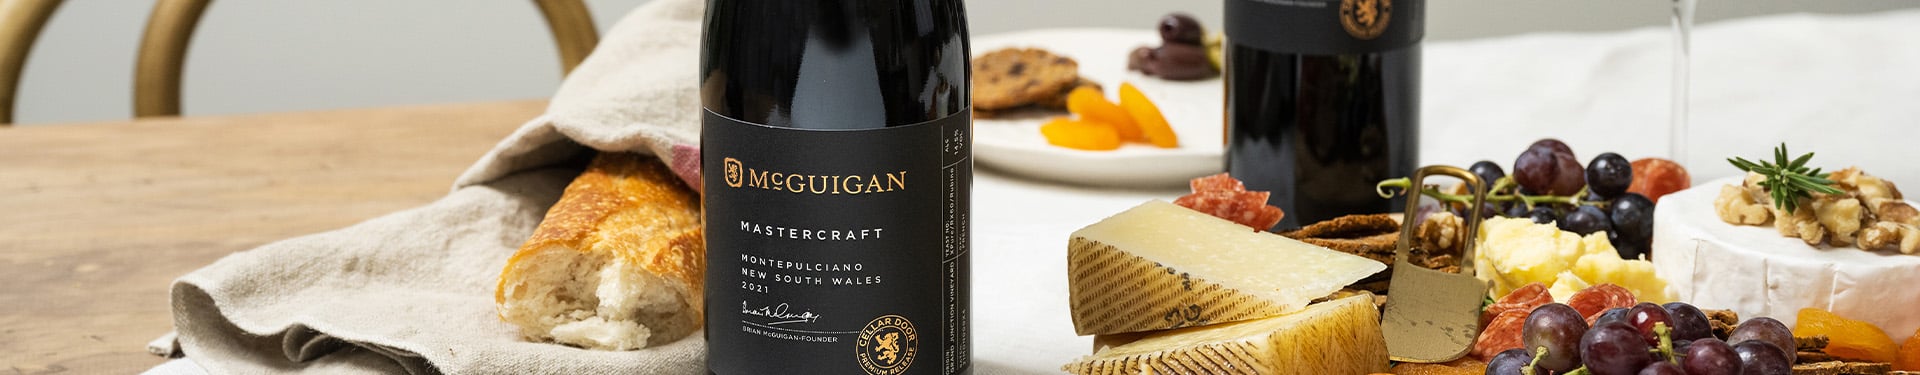 Bottle of McGuigan Mastercraft varietal next to bread and fruit